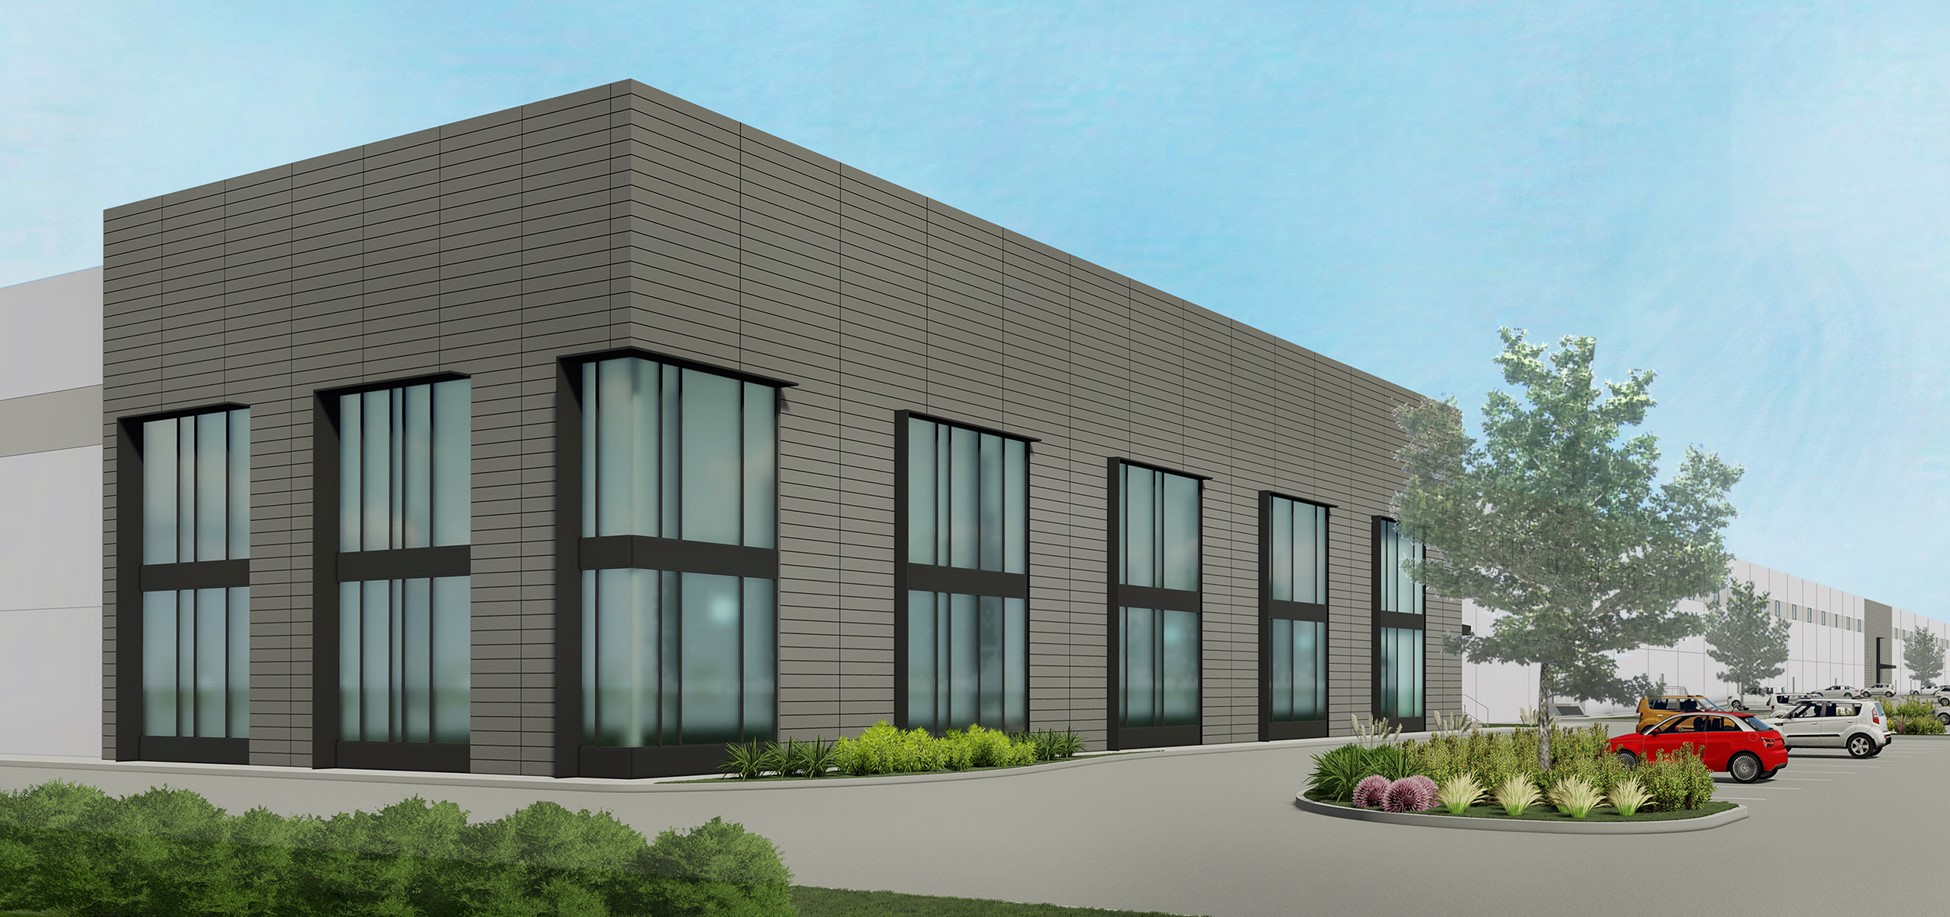 Ackerman & Co. Makes Debut in San Antonio Industrial Market with 307,000-sq.-ft. Development